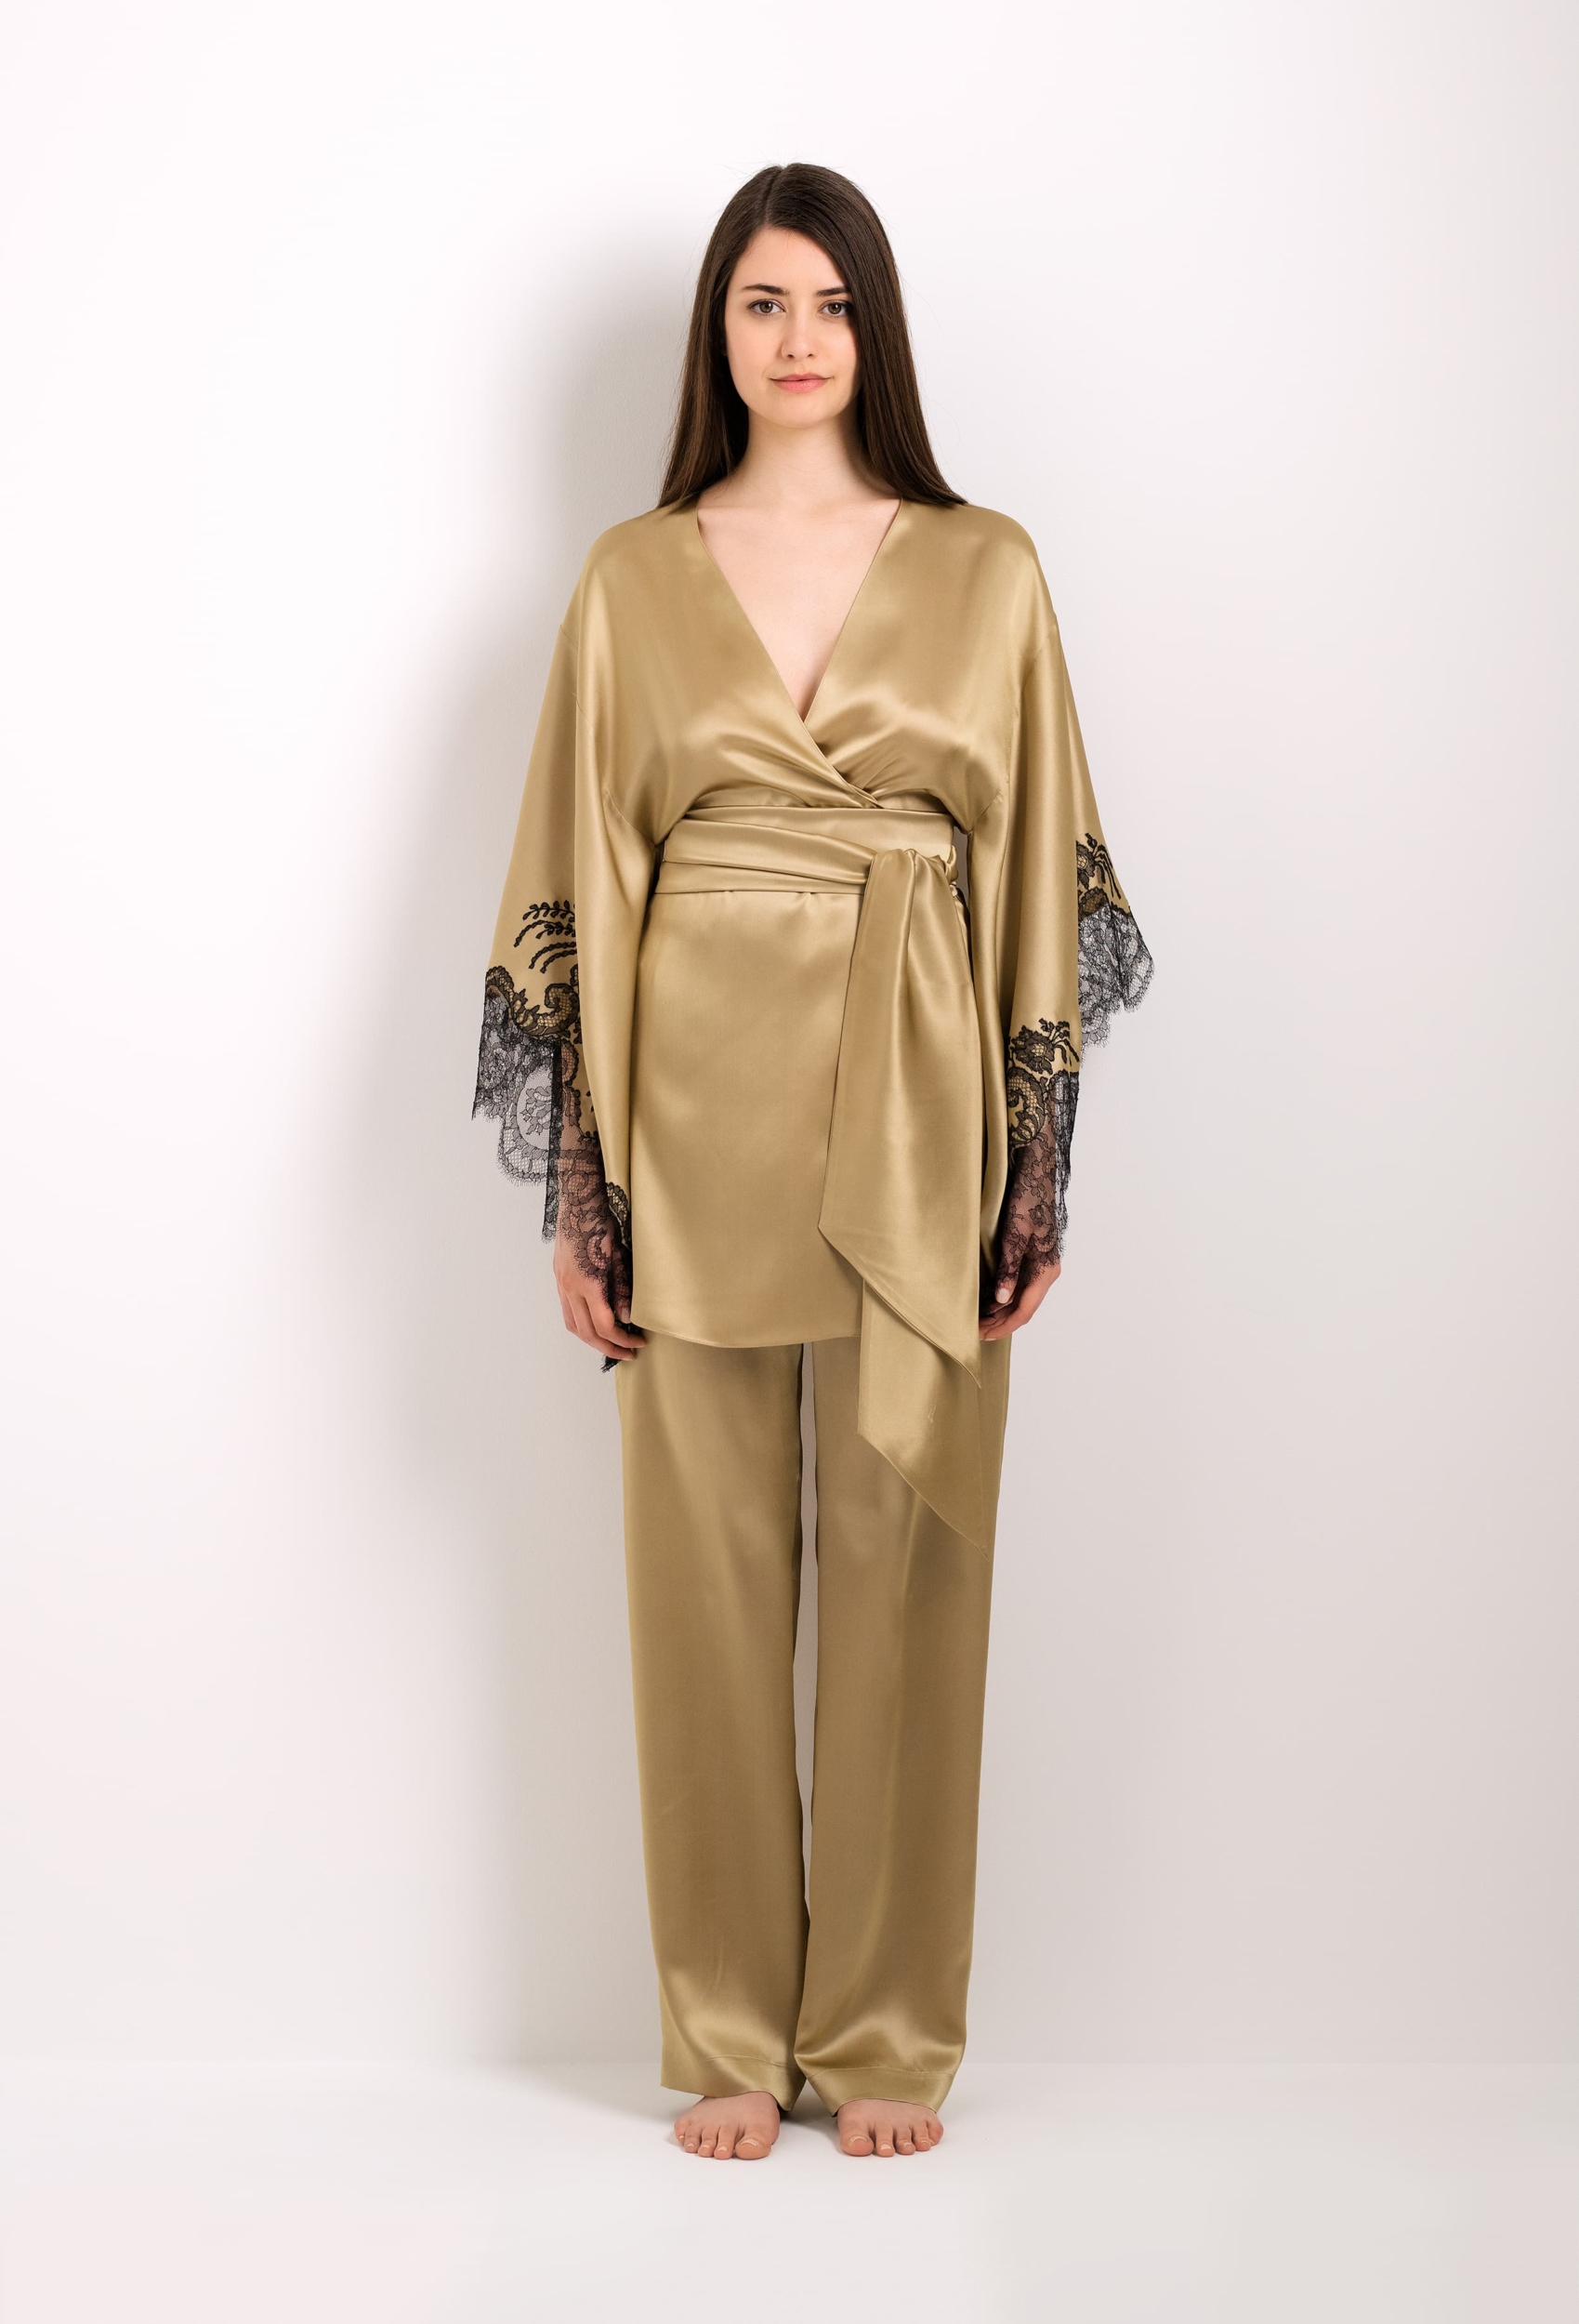 Short silk kimono - gold and black Venise Caudry lace - Carine Gilson